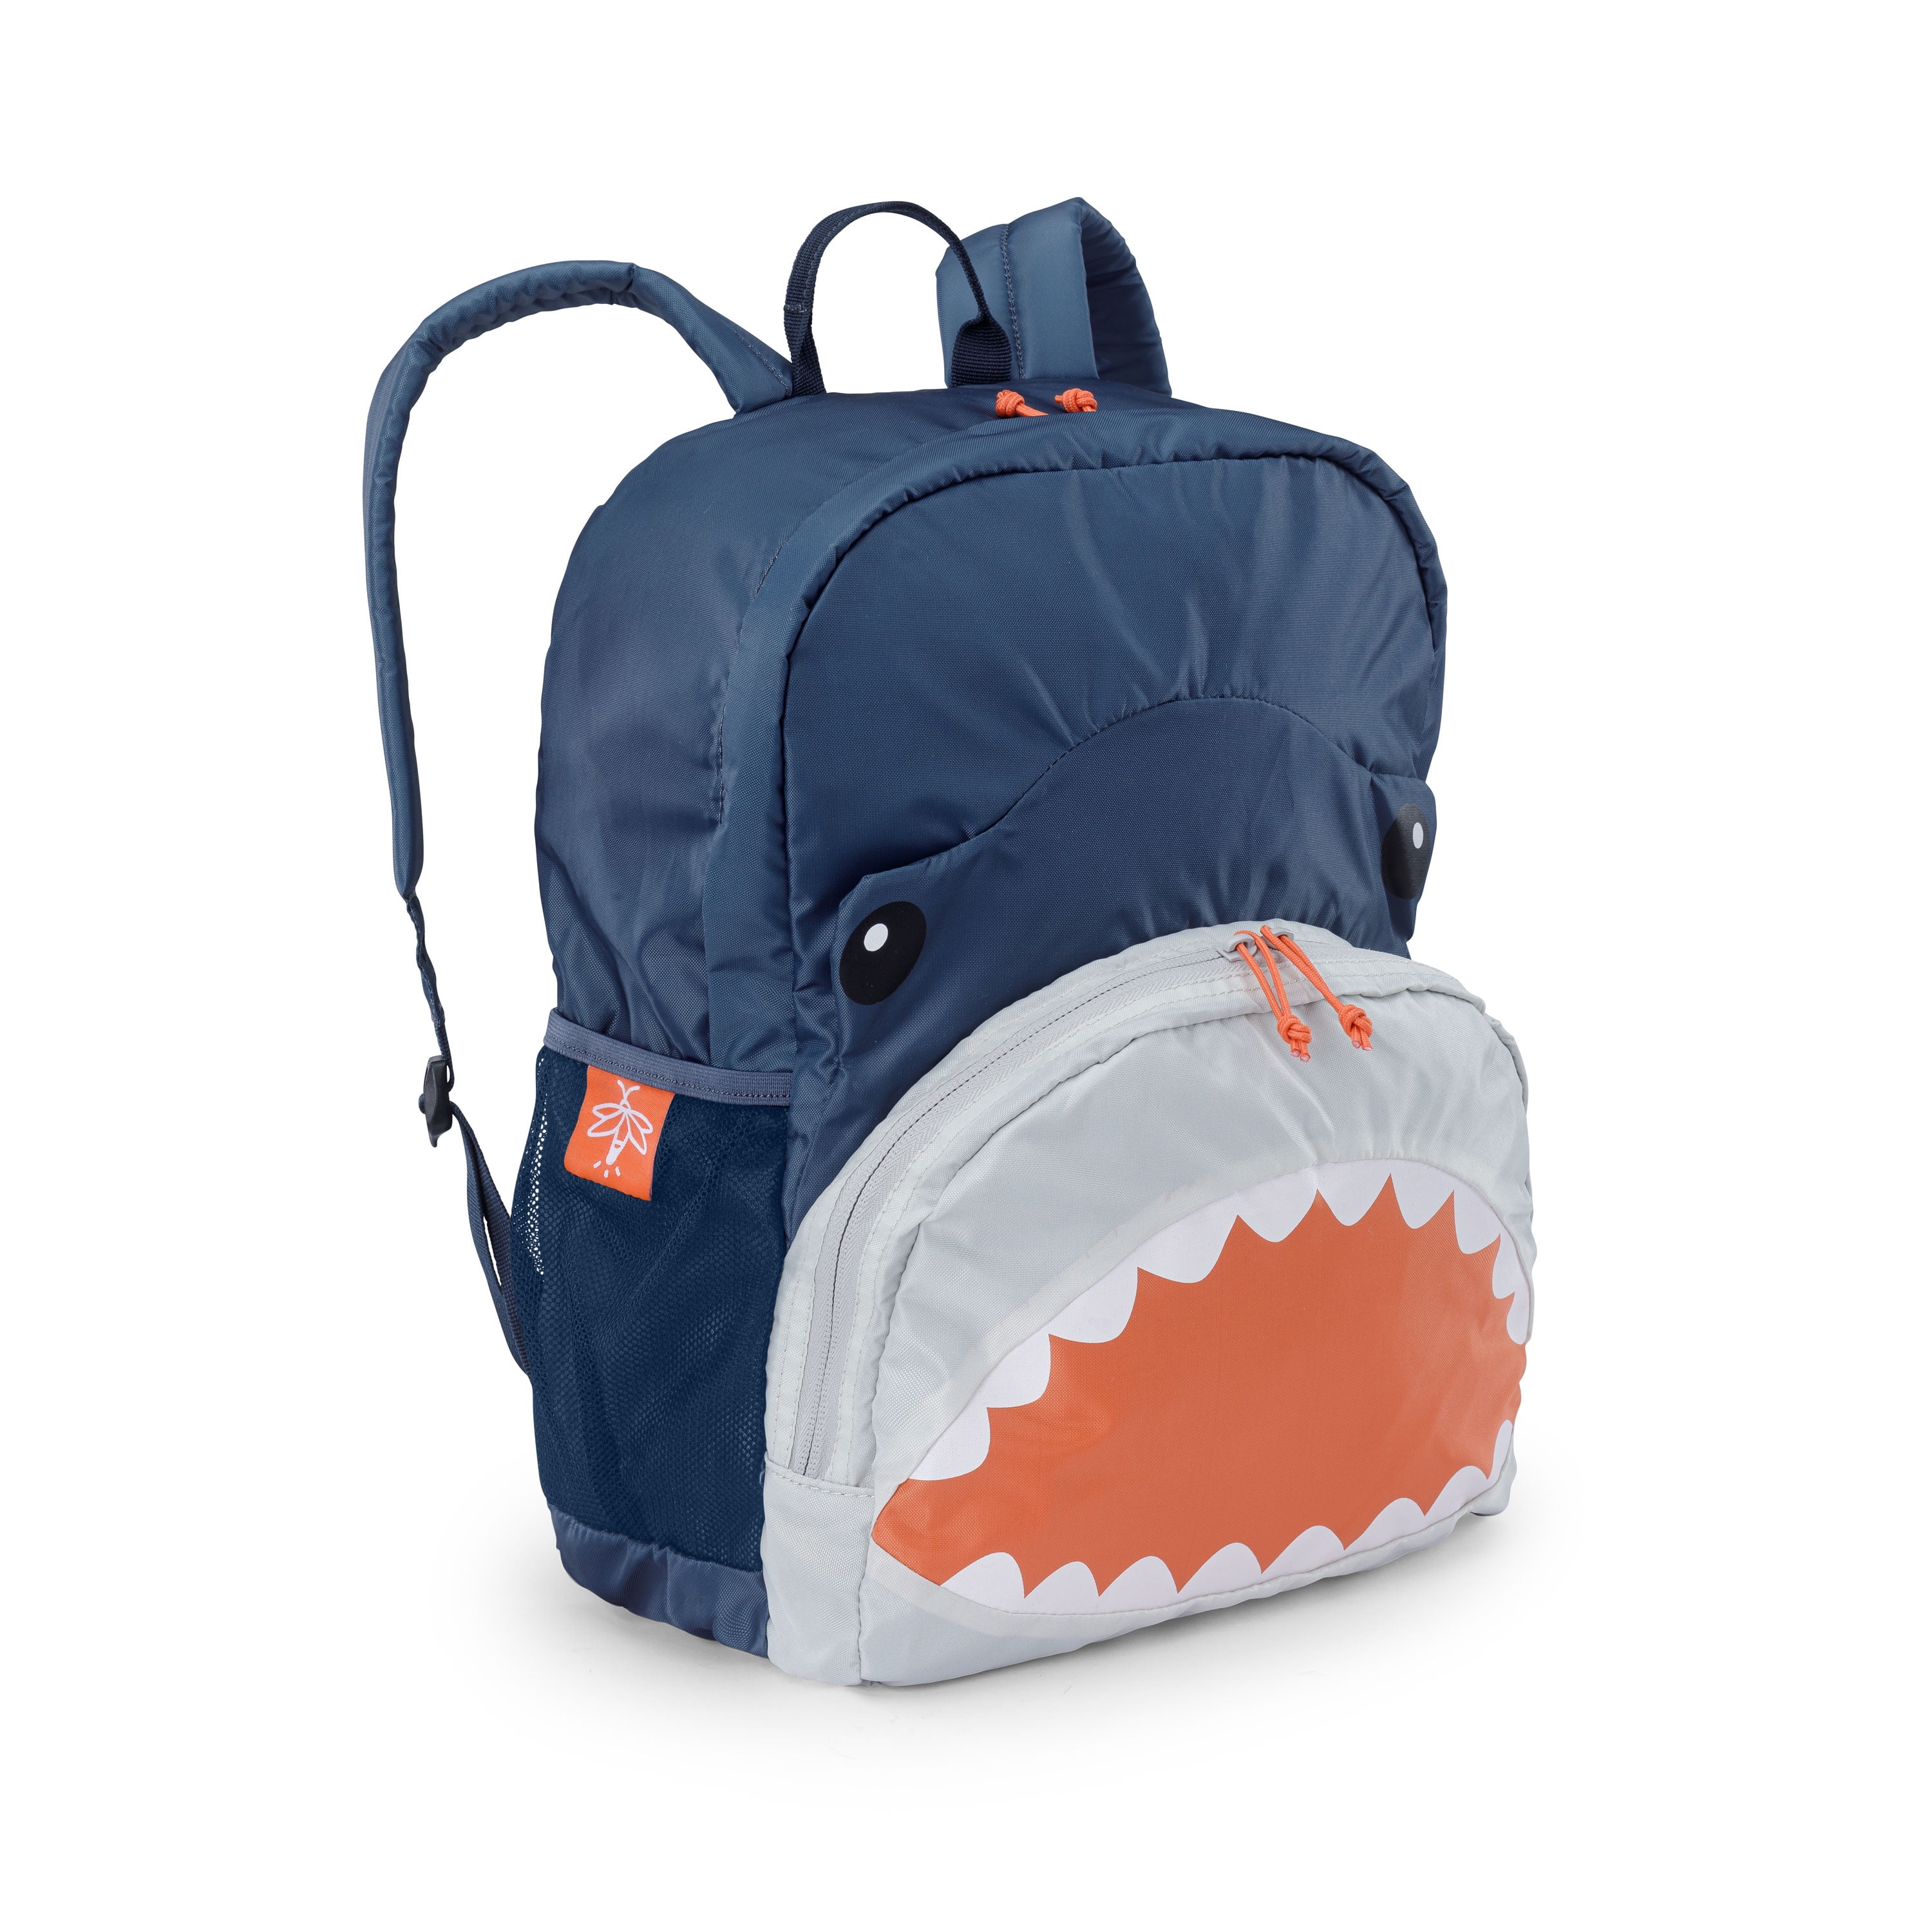 SHARP-Q Brilliant Shark Kids Lightweight Canvas Travel Backpacks School Book Bag